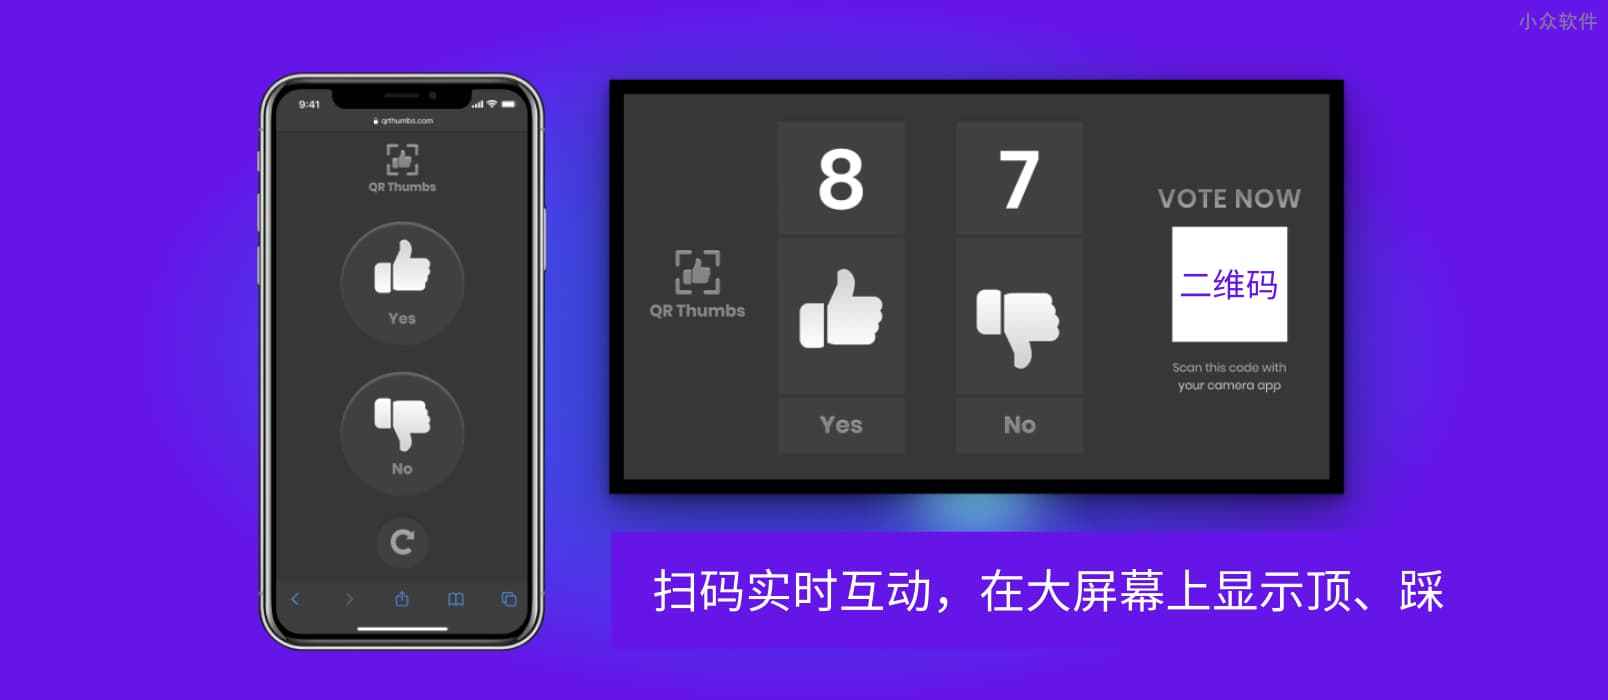 QR Thumbs – 扫码实时互动，在大屏幕上显示顶、踩